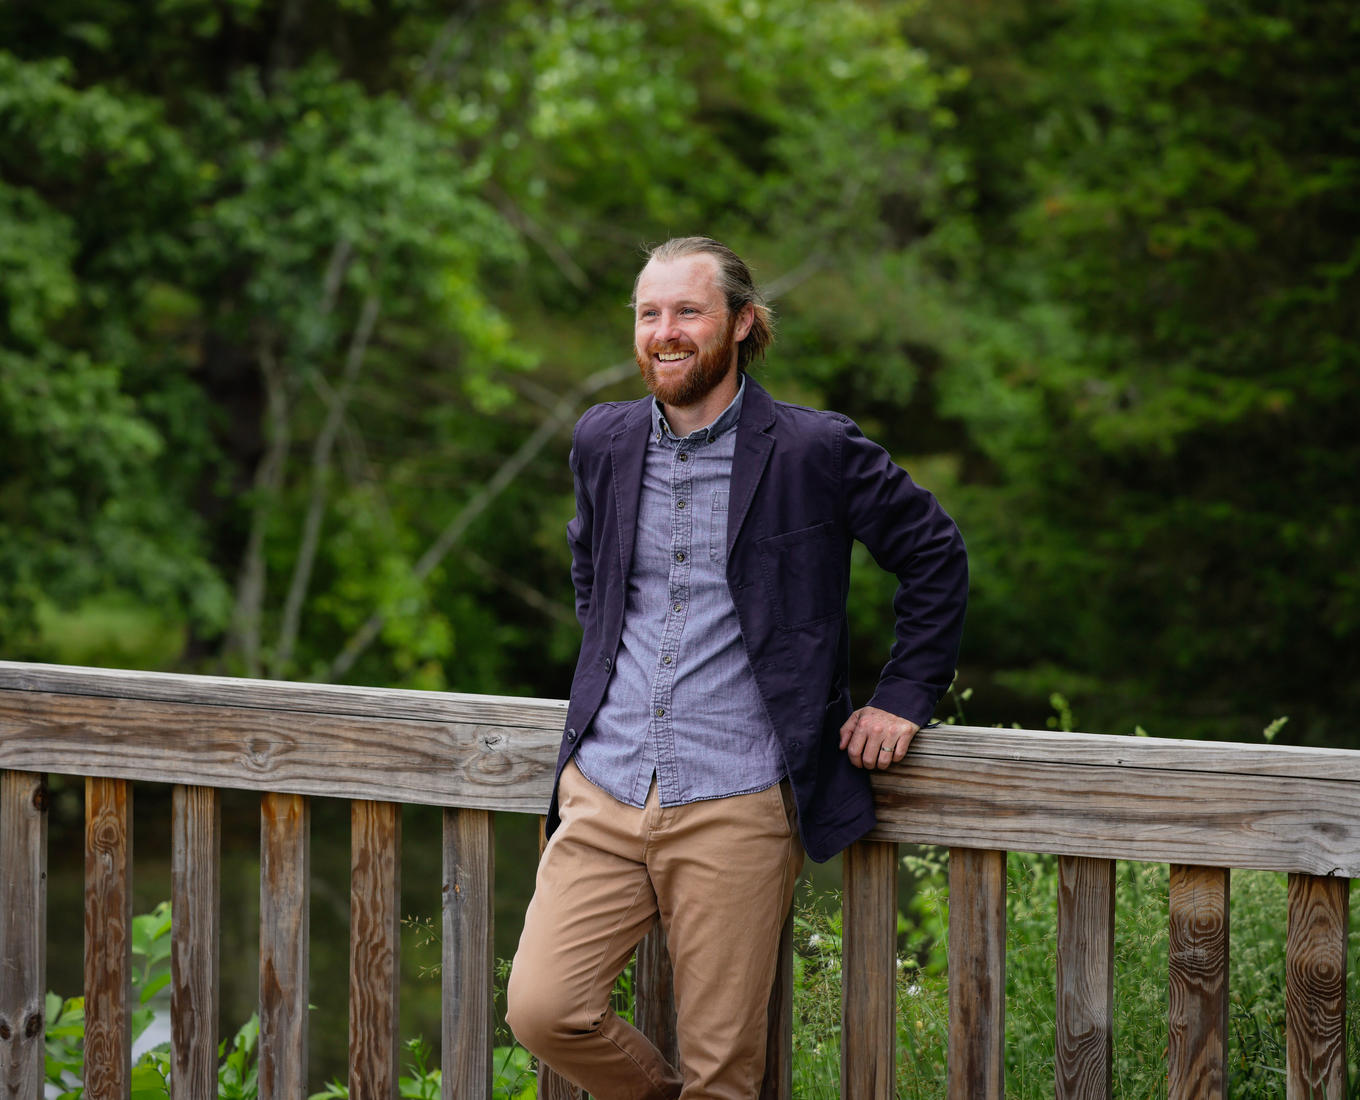 Bearded man leans against a bridge railing